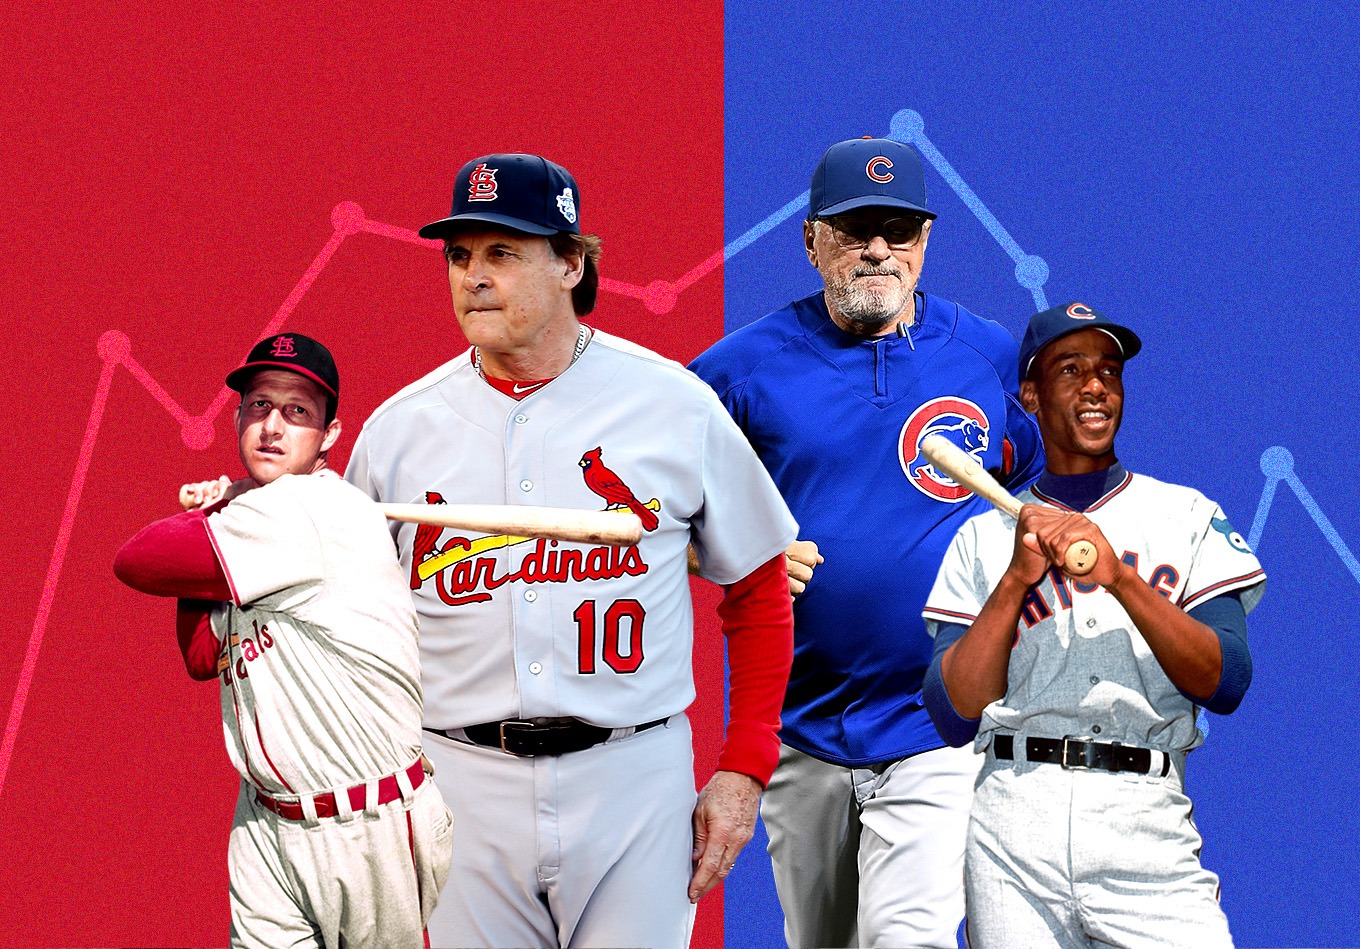 The Viz: The Chicago Cubs vs. St. Louis Cardinals Through Time